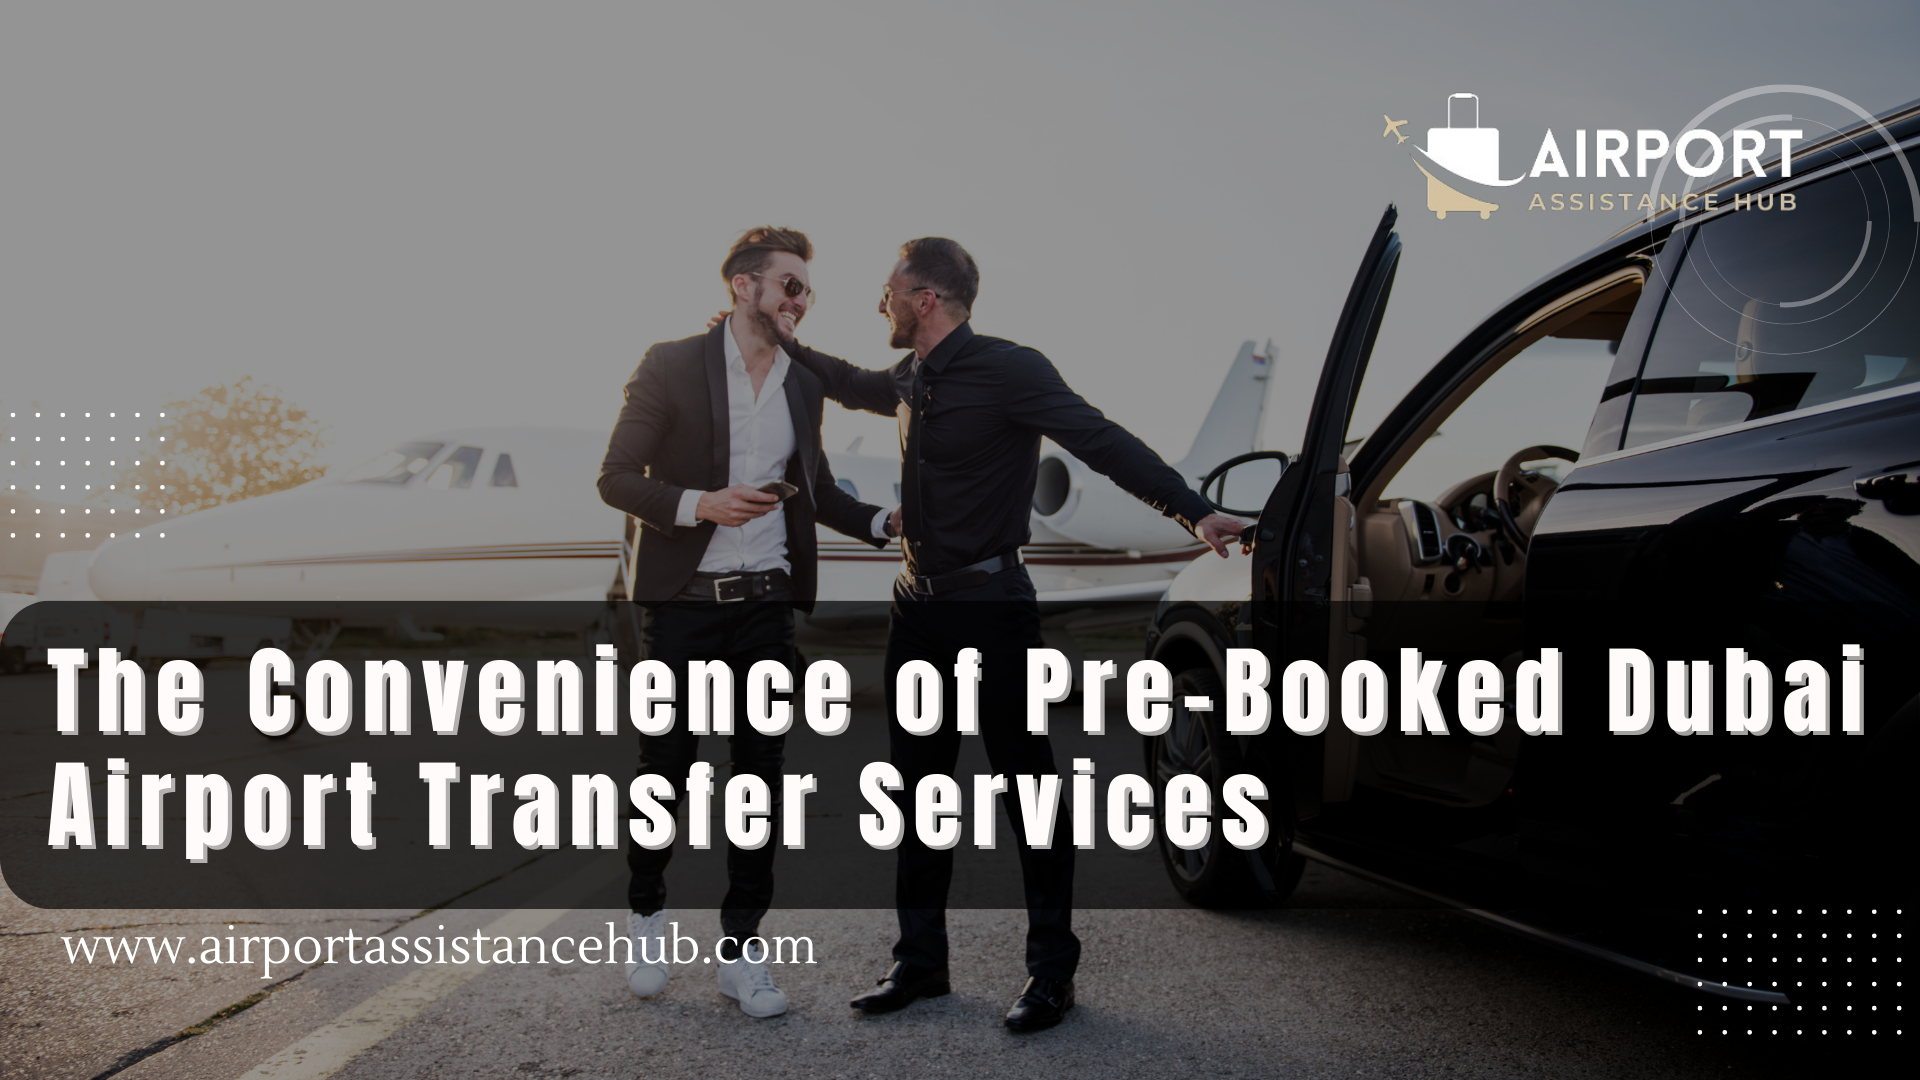 Dubai Airport Transfer Services